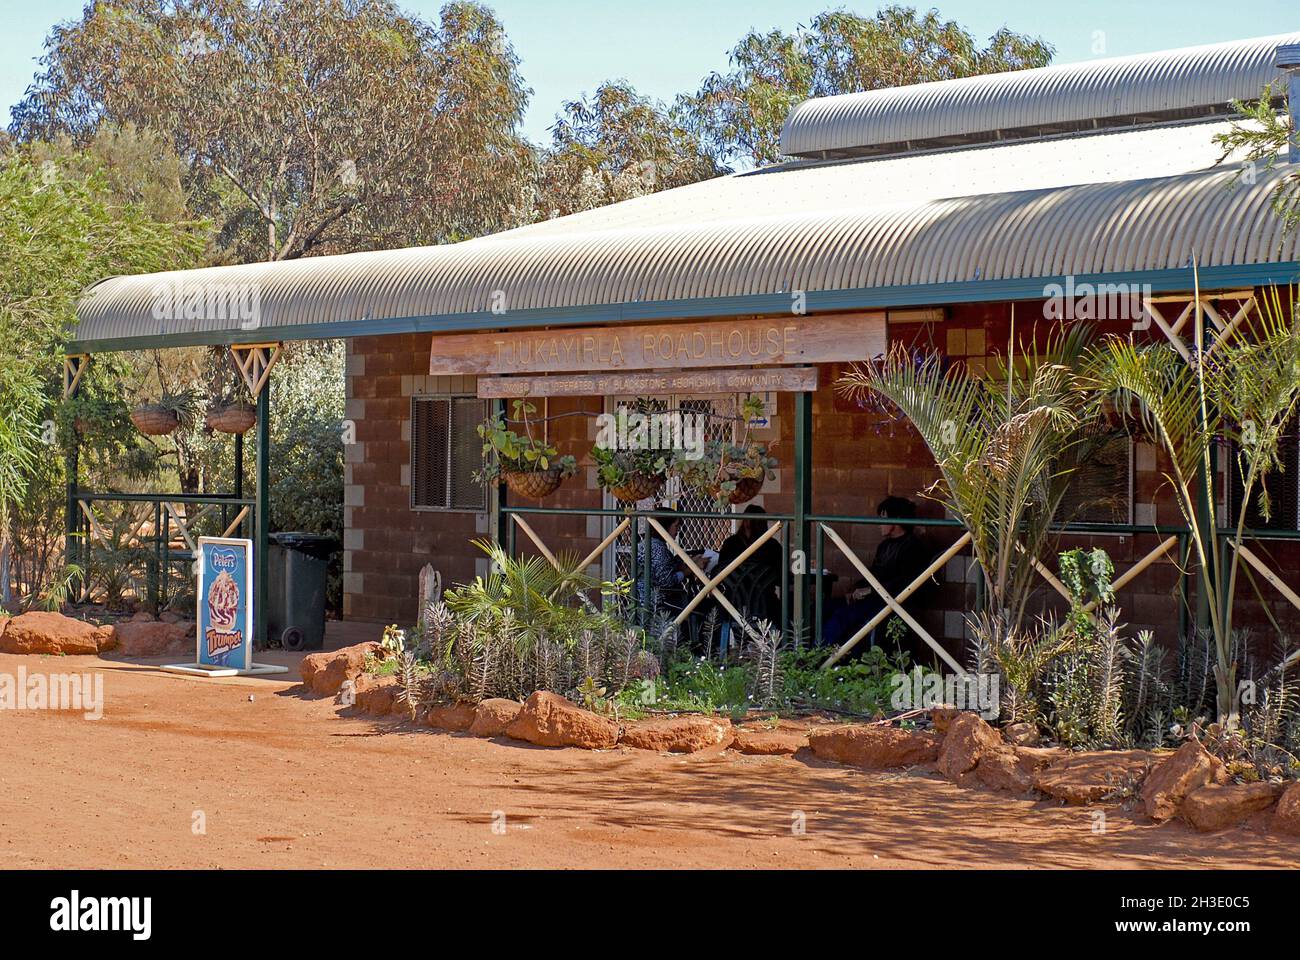 Roadhouse at the outback, Australia Stock Photo